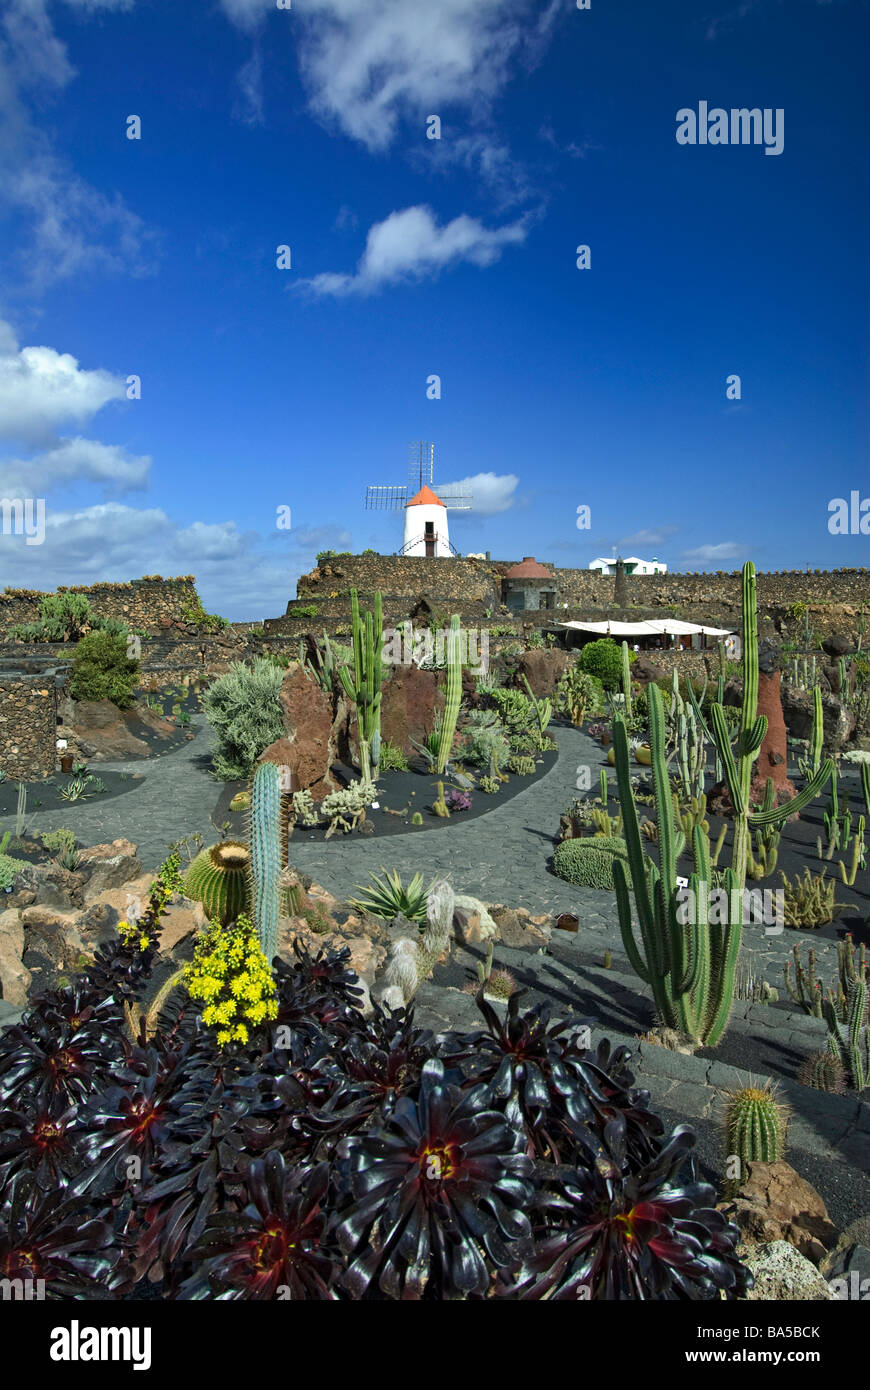 Jardin de cactus, jardin de cactus à Guatiza, moulin à Lanzarote Iles Canaries Espagne Banque D'Images